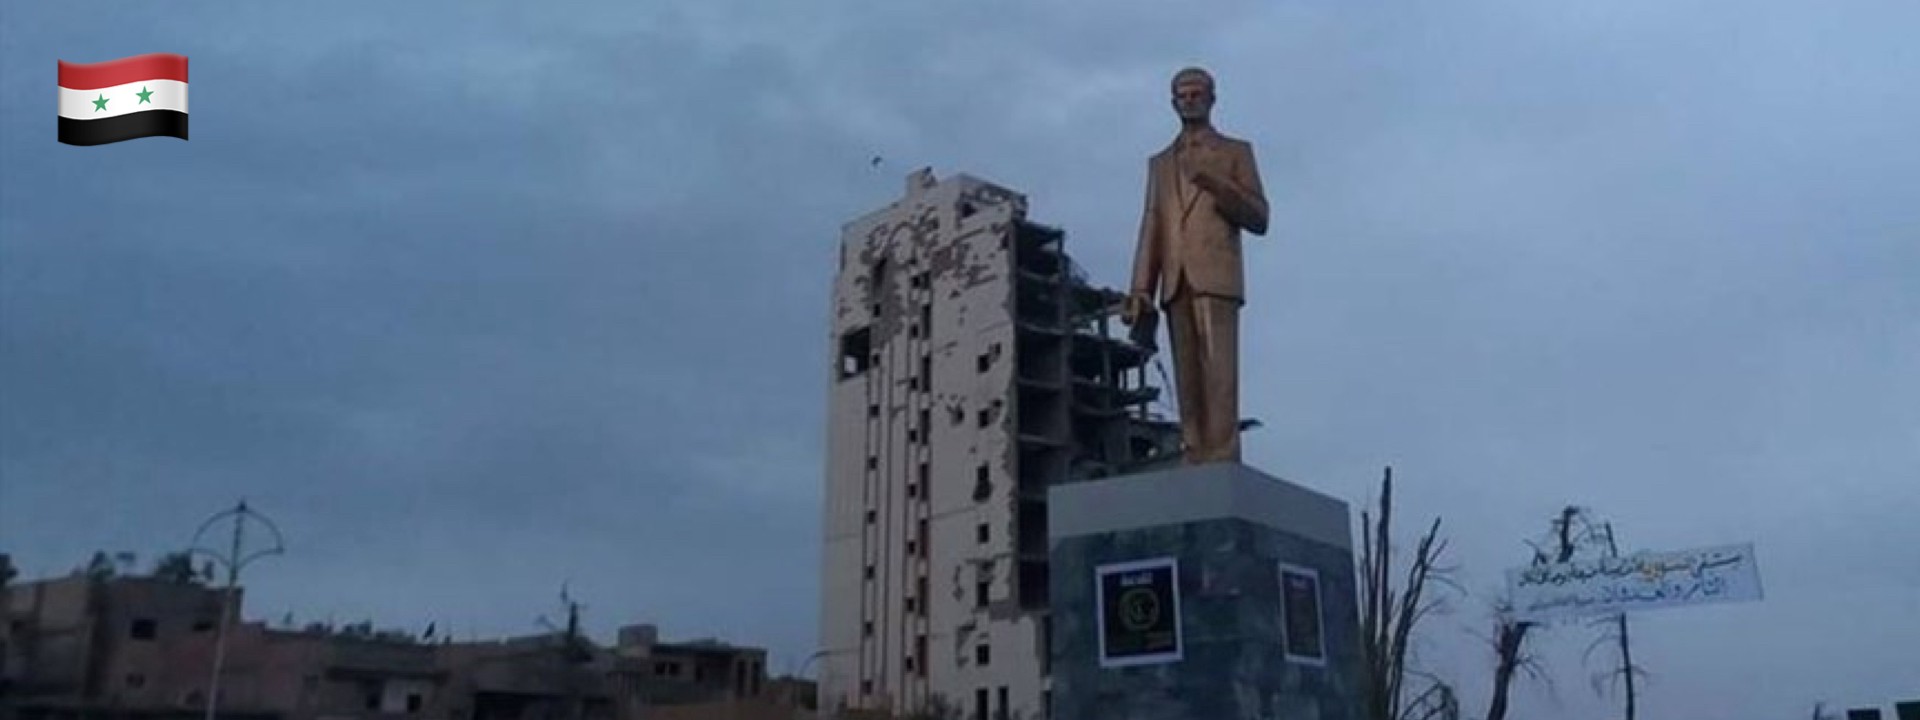 #BreakingSyria: Reconstruction Starts with Statues in Deir ez-Zor